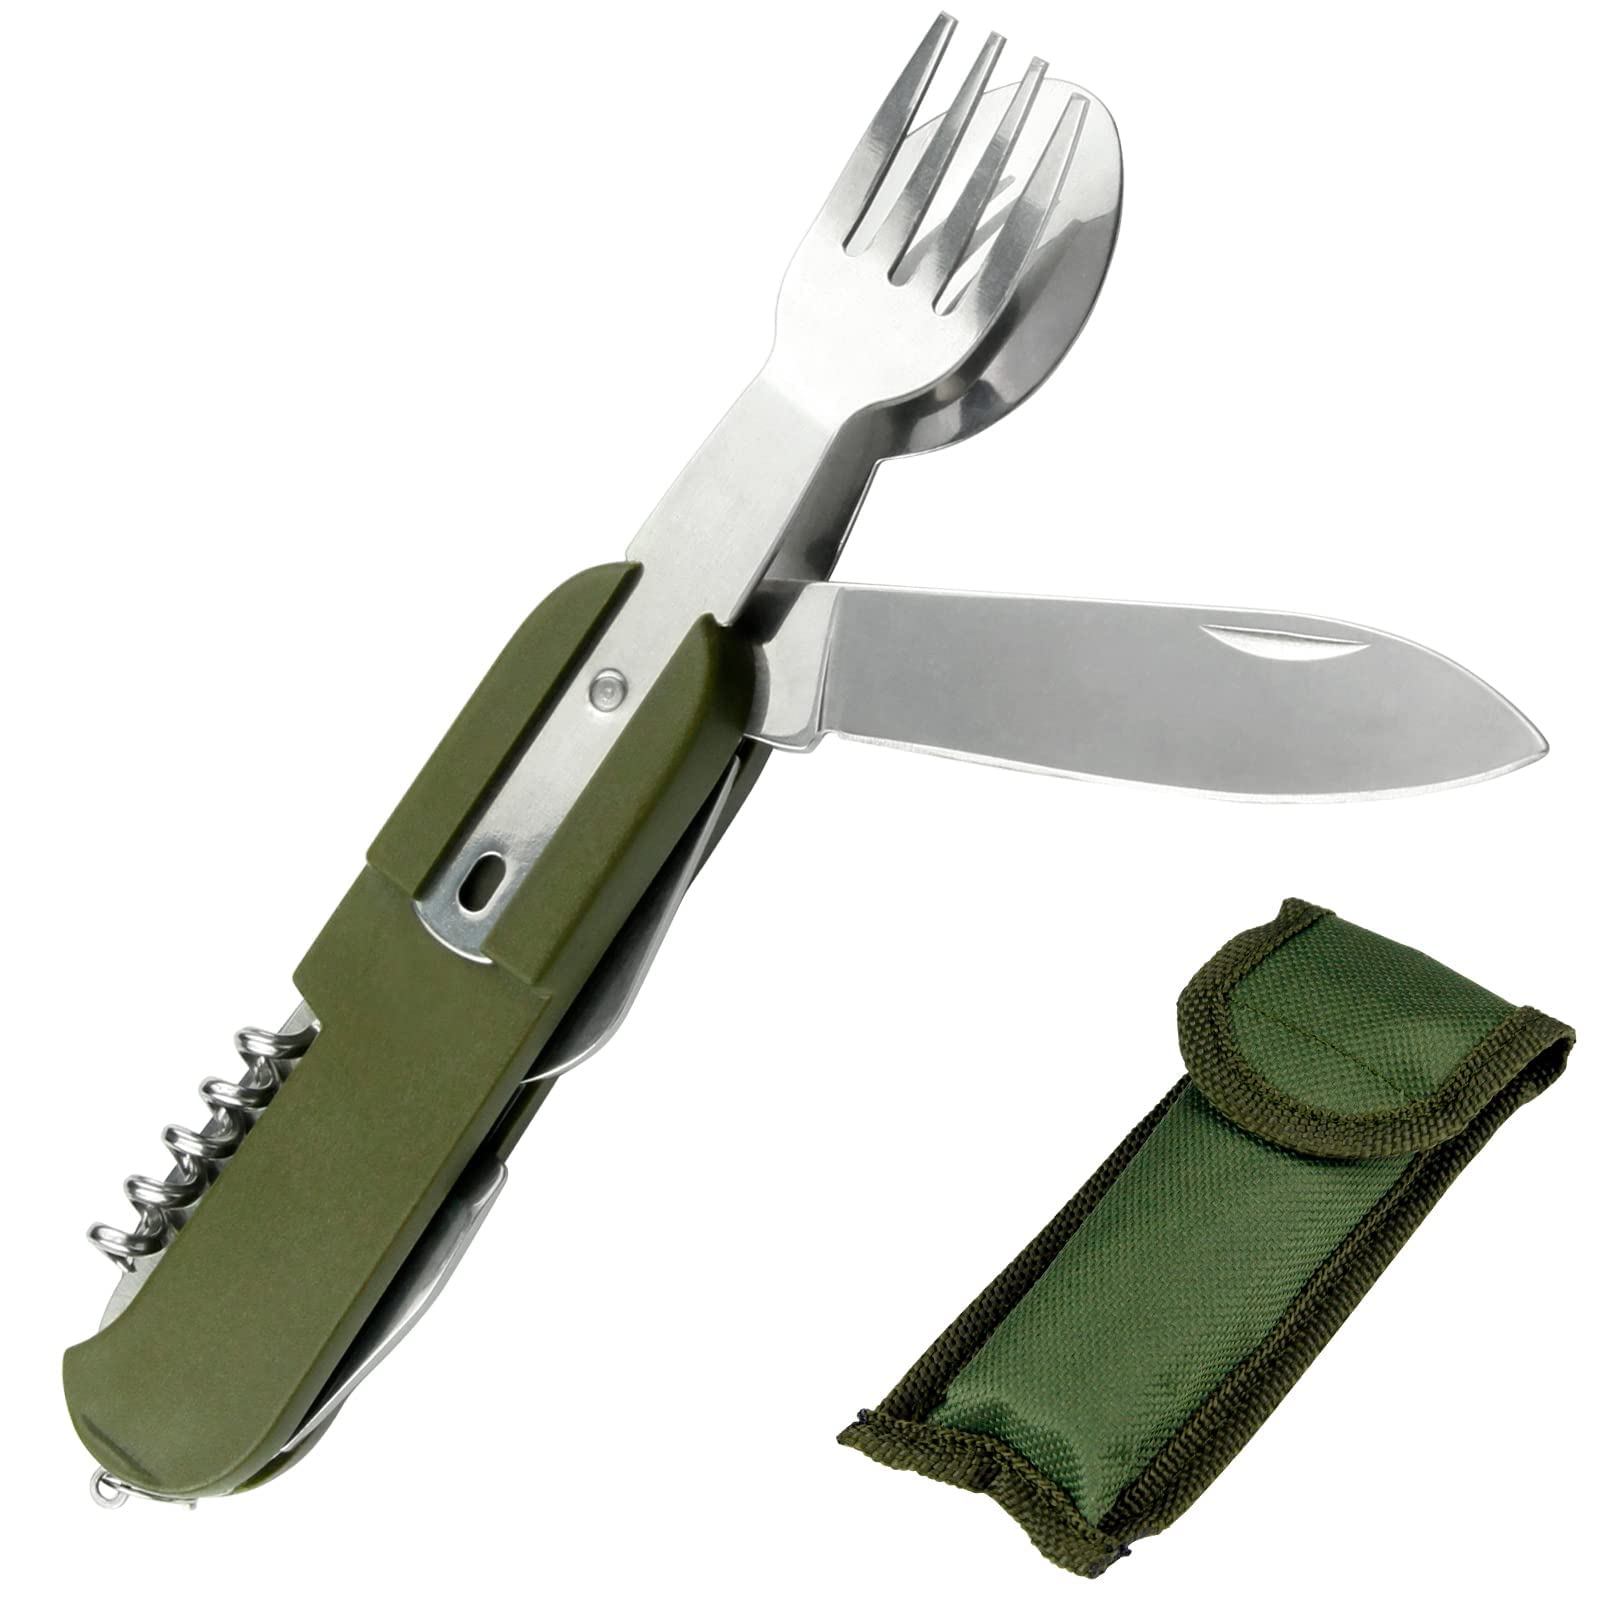 Picnic cutlery